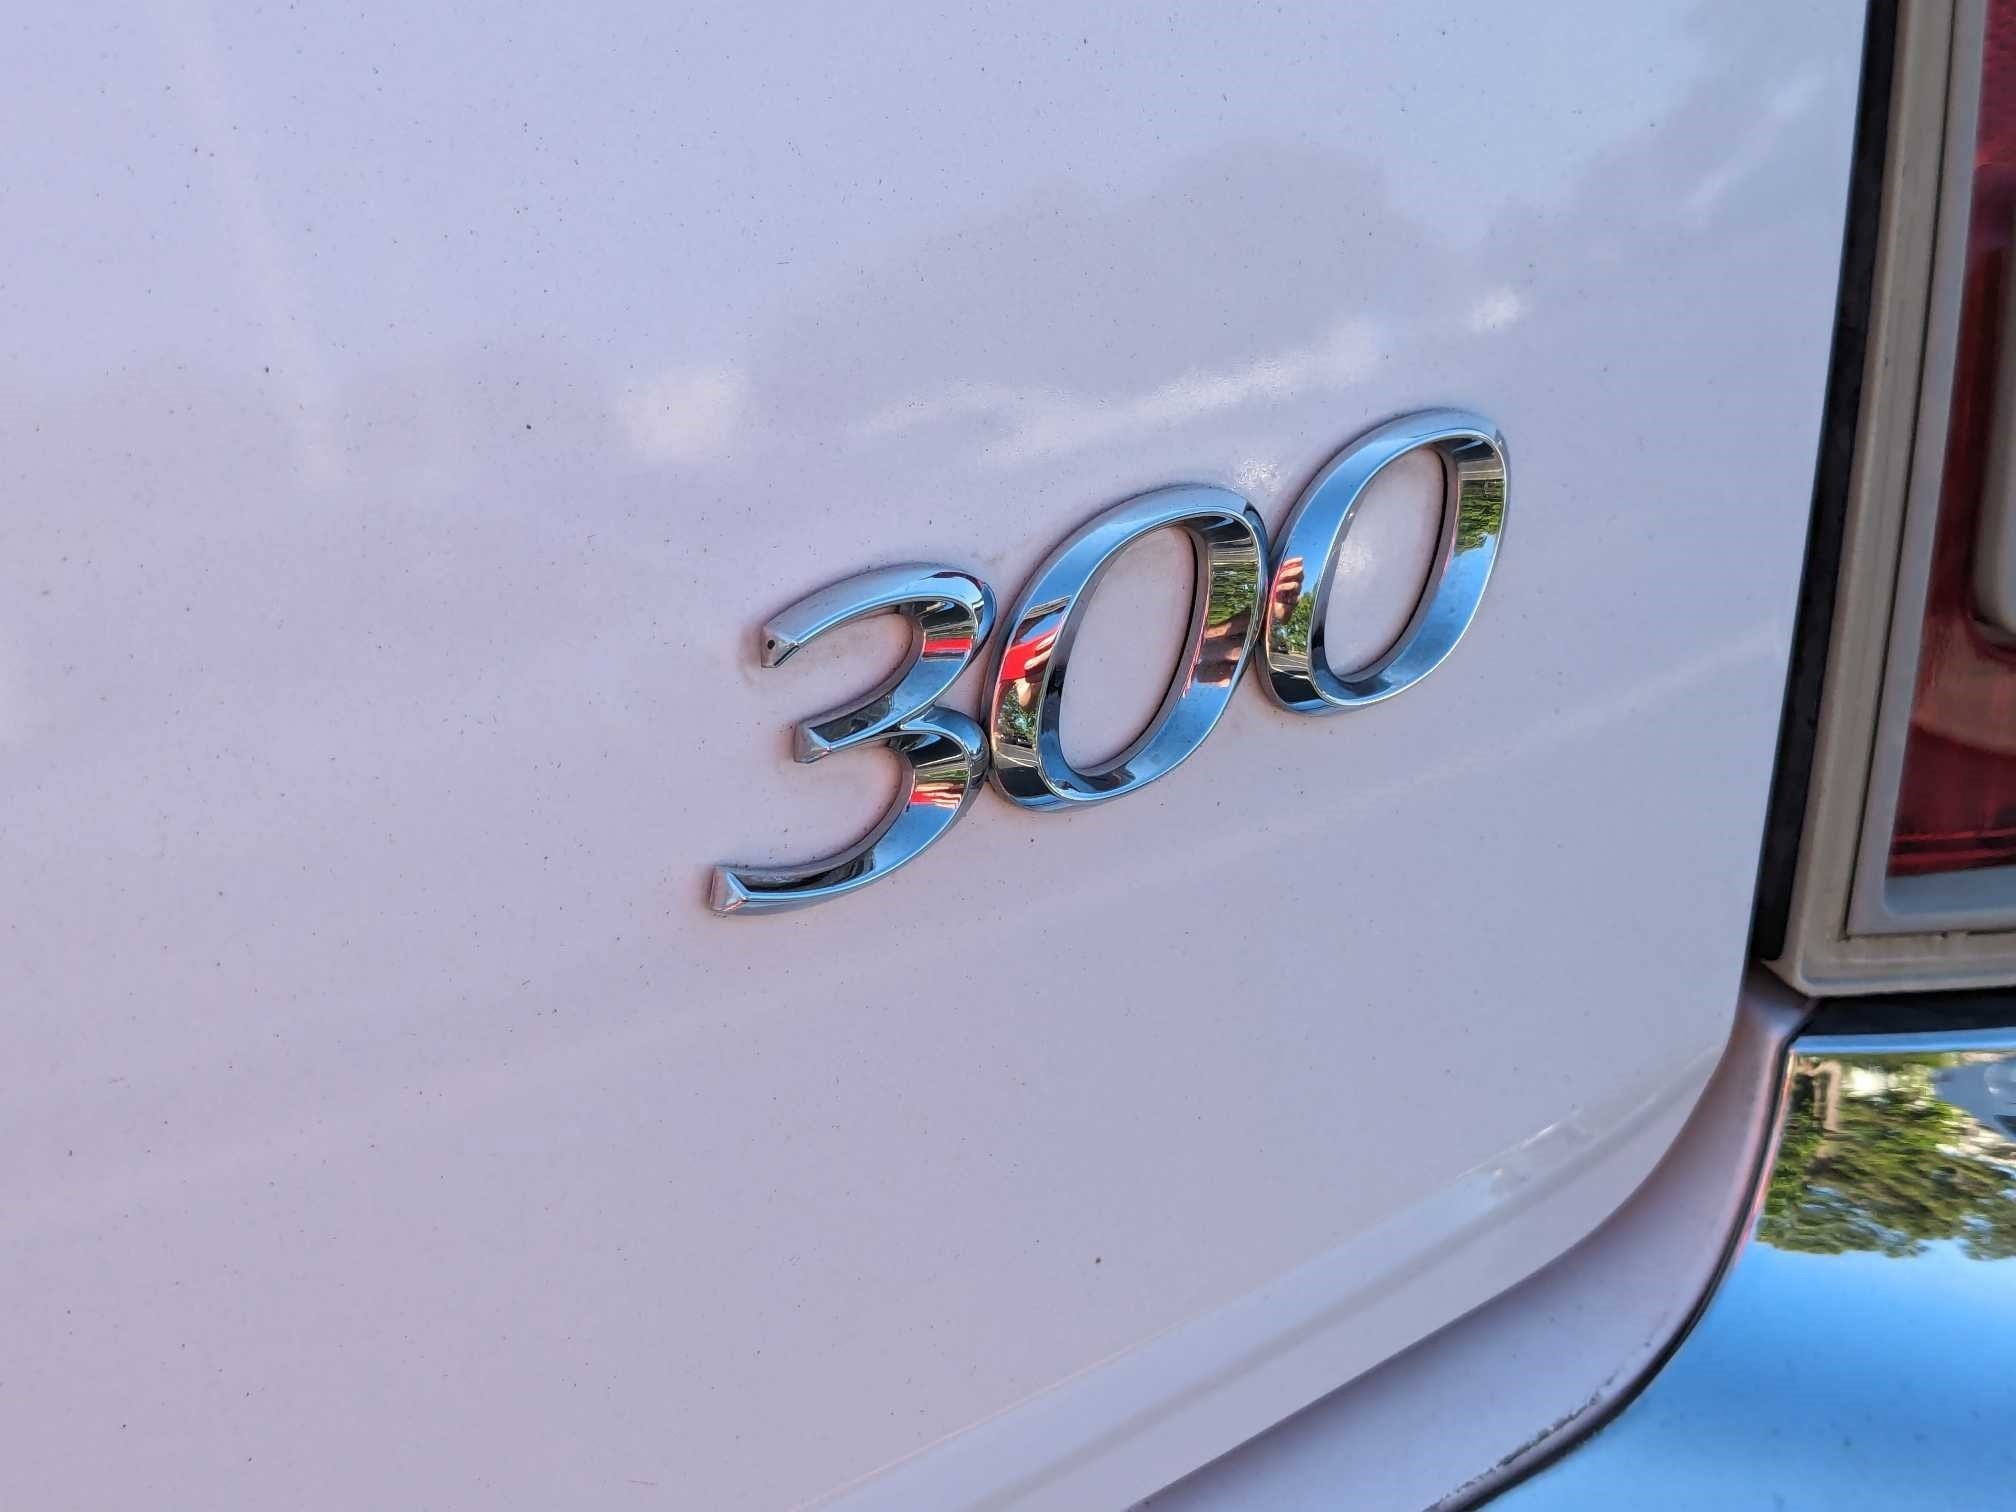 2013 Chrysler 300 4dr Sdn RWD